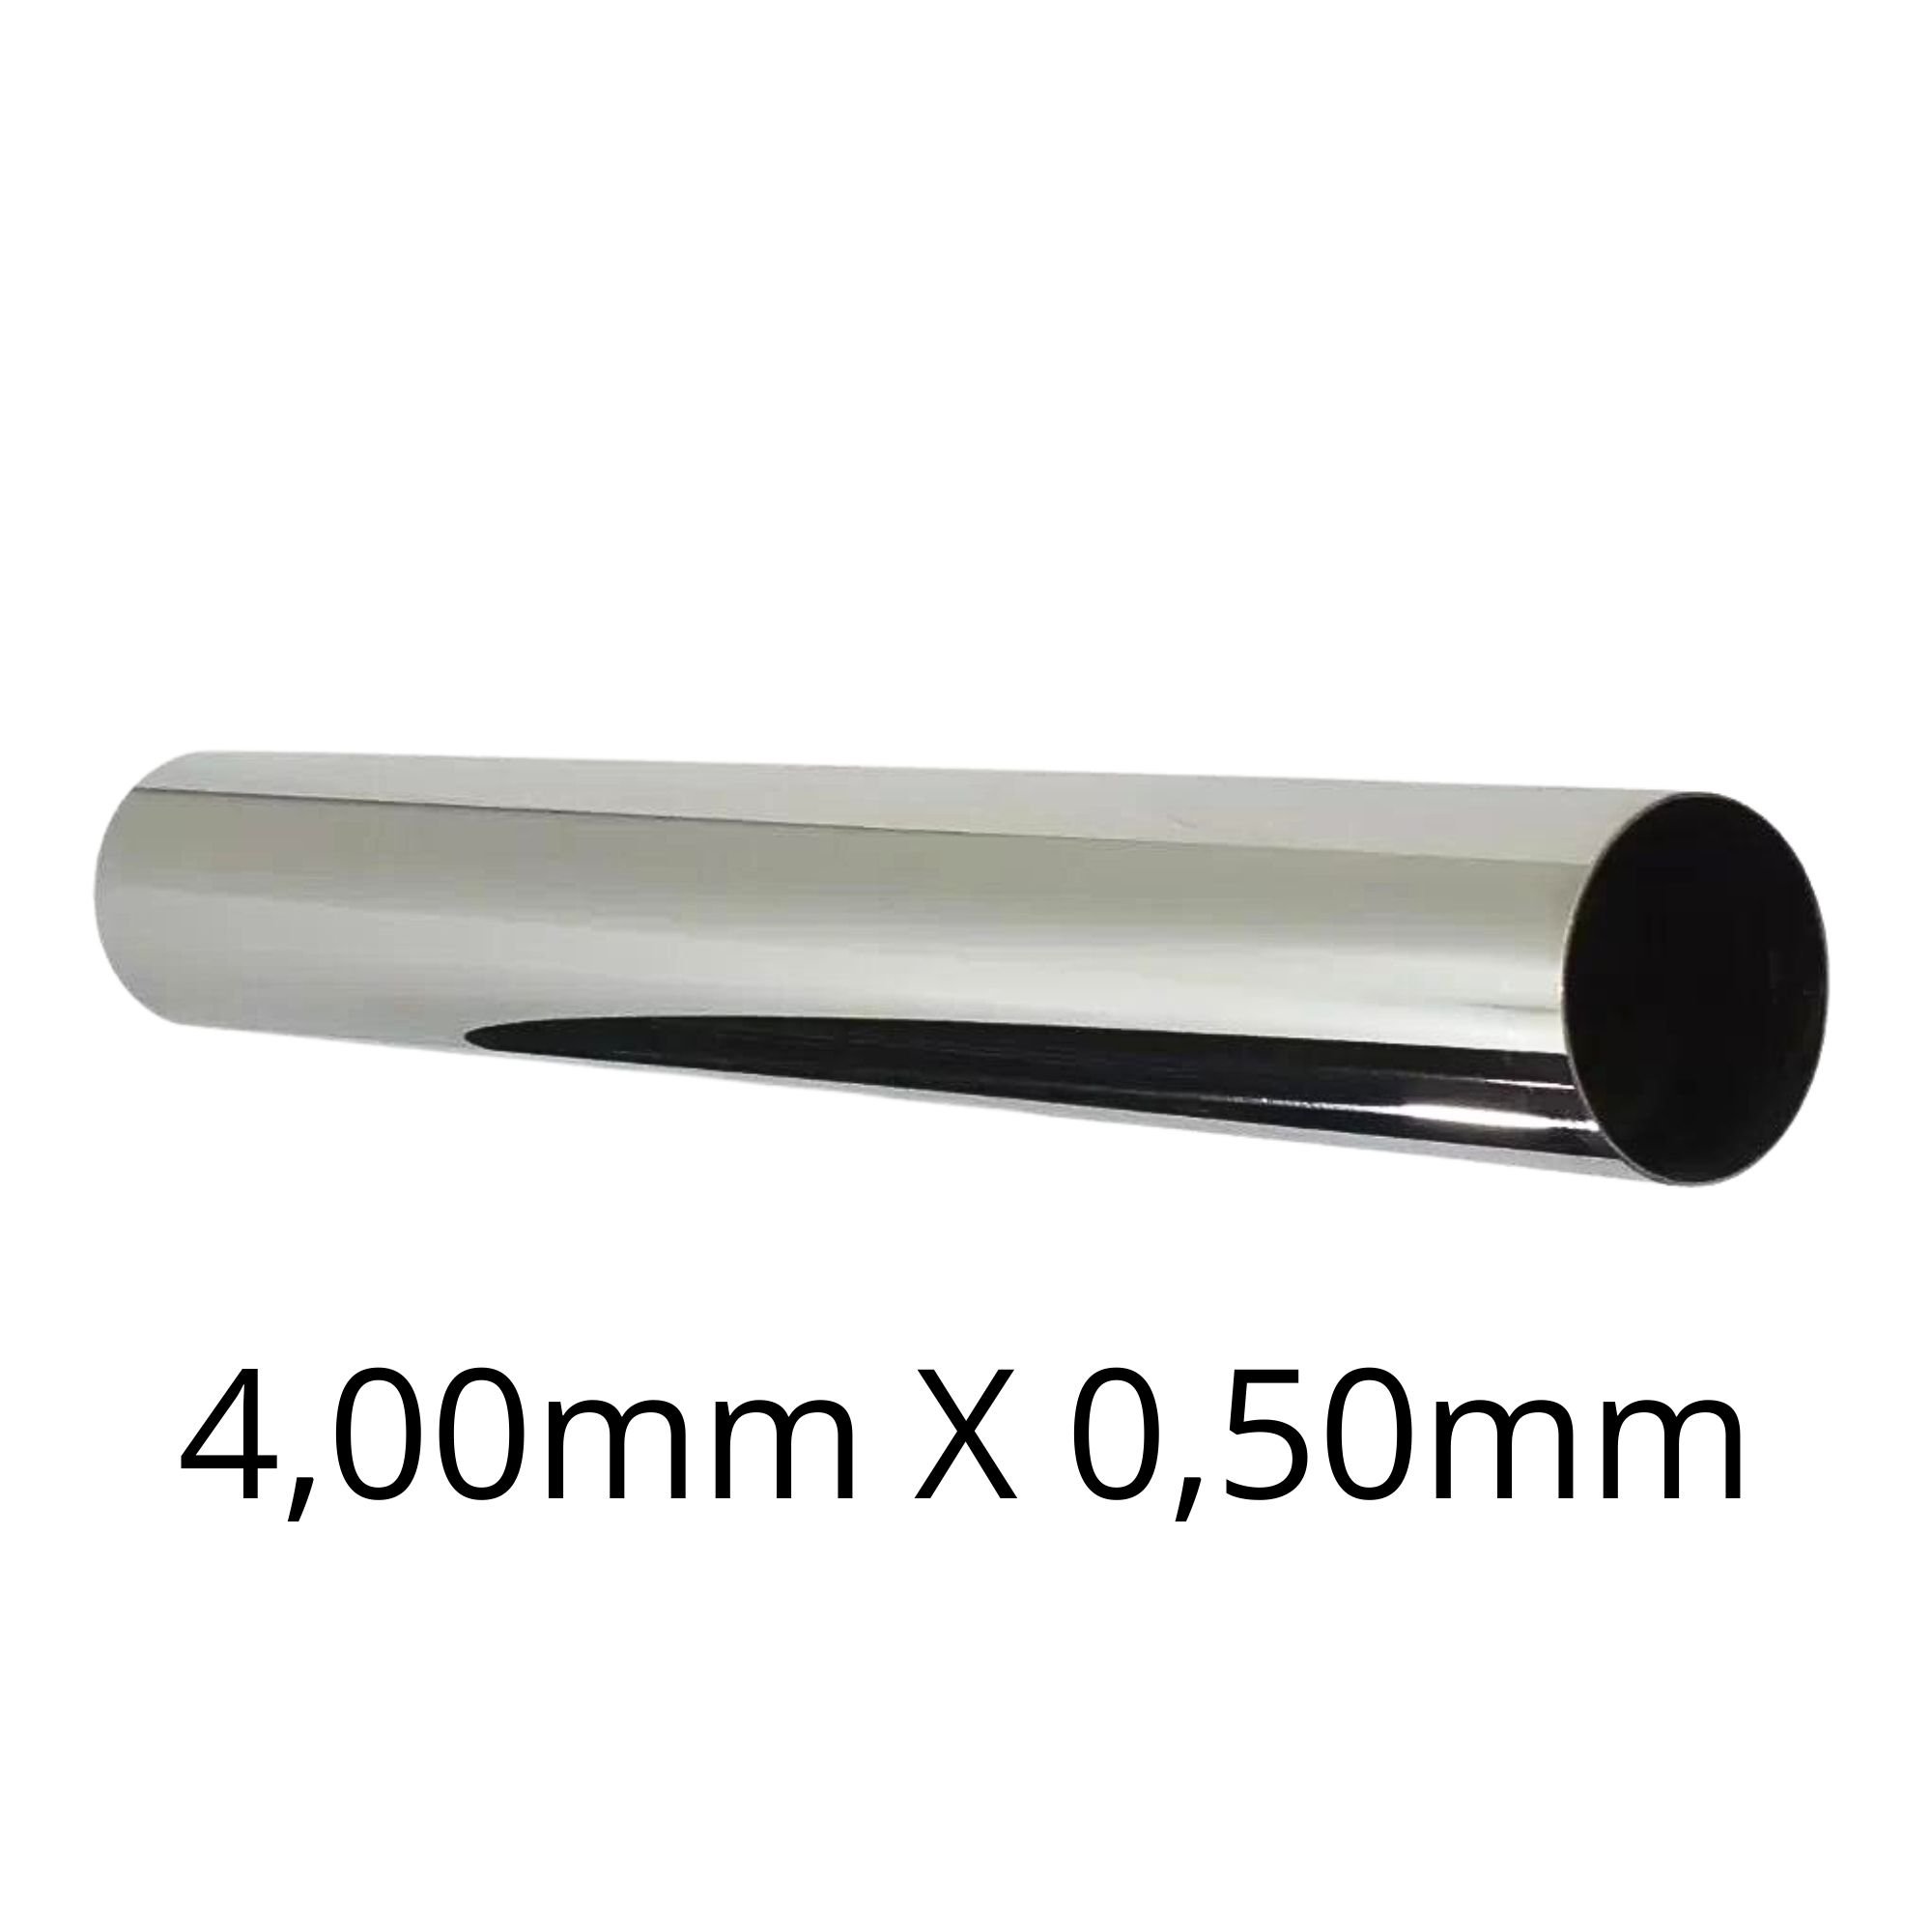 Tubo Inox - 04,00mm X 0,50mm - Polido - 304/l - C/c - 10 Cm - 1